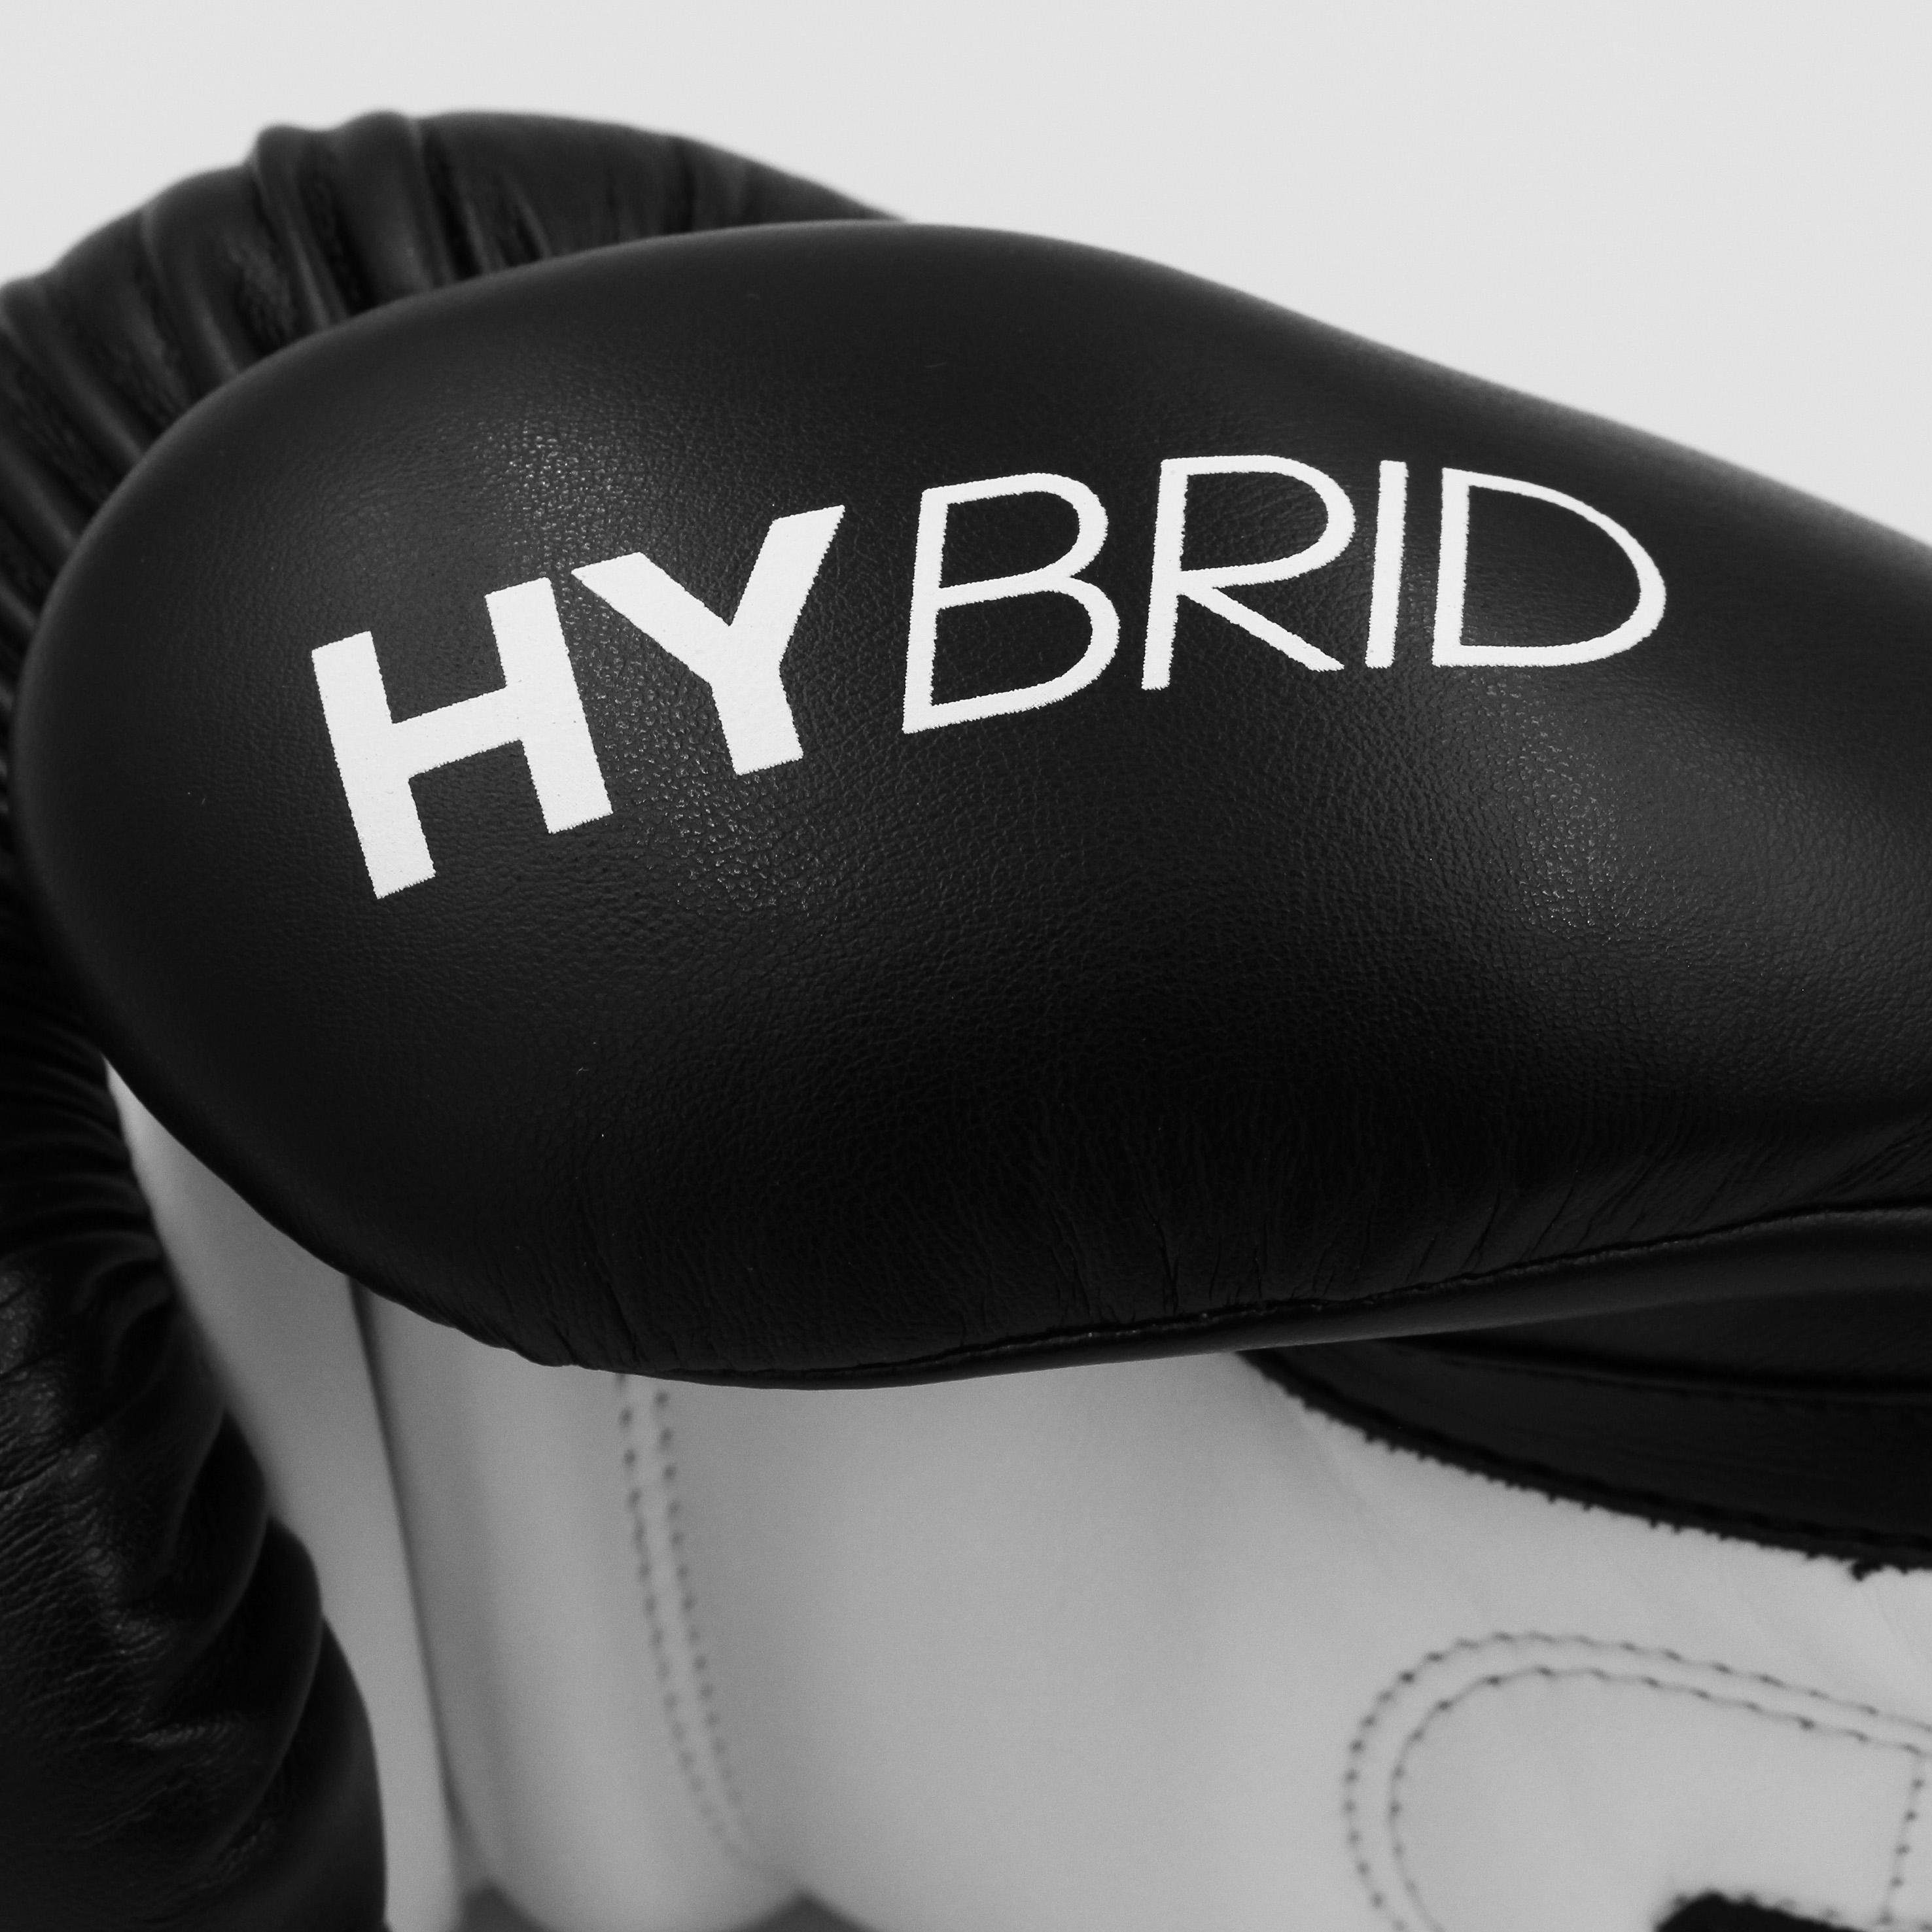 50 Performance schwarz/weiß adidas Boxhandschuhe Hyprid